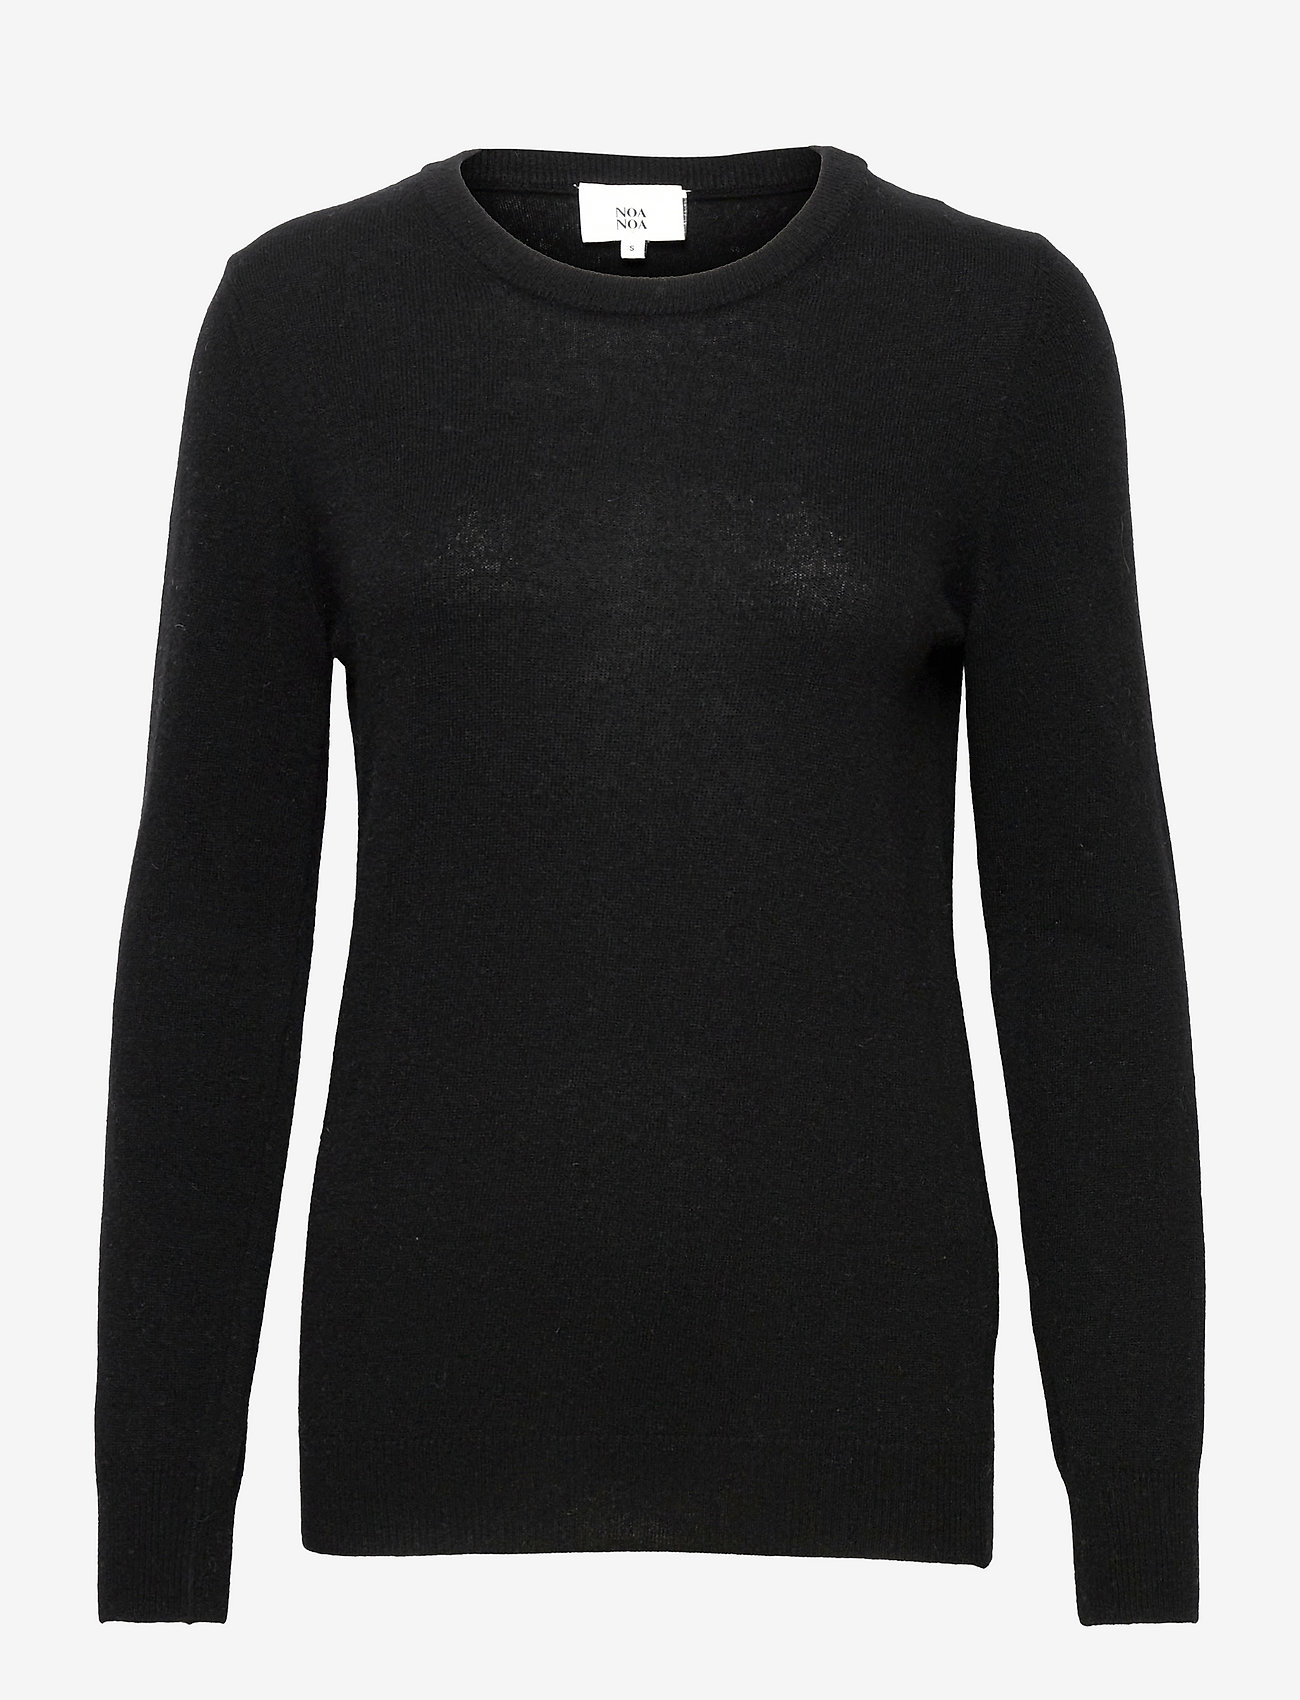 Noa Noa - Pullover - tröjor - black - 0